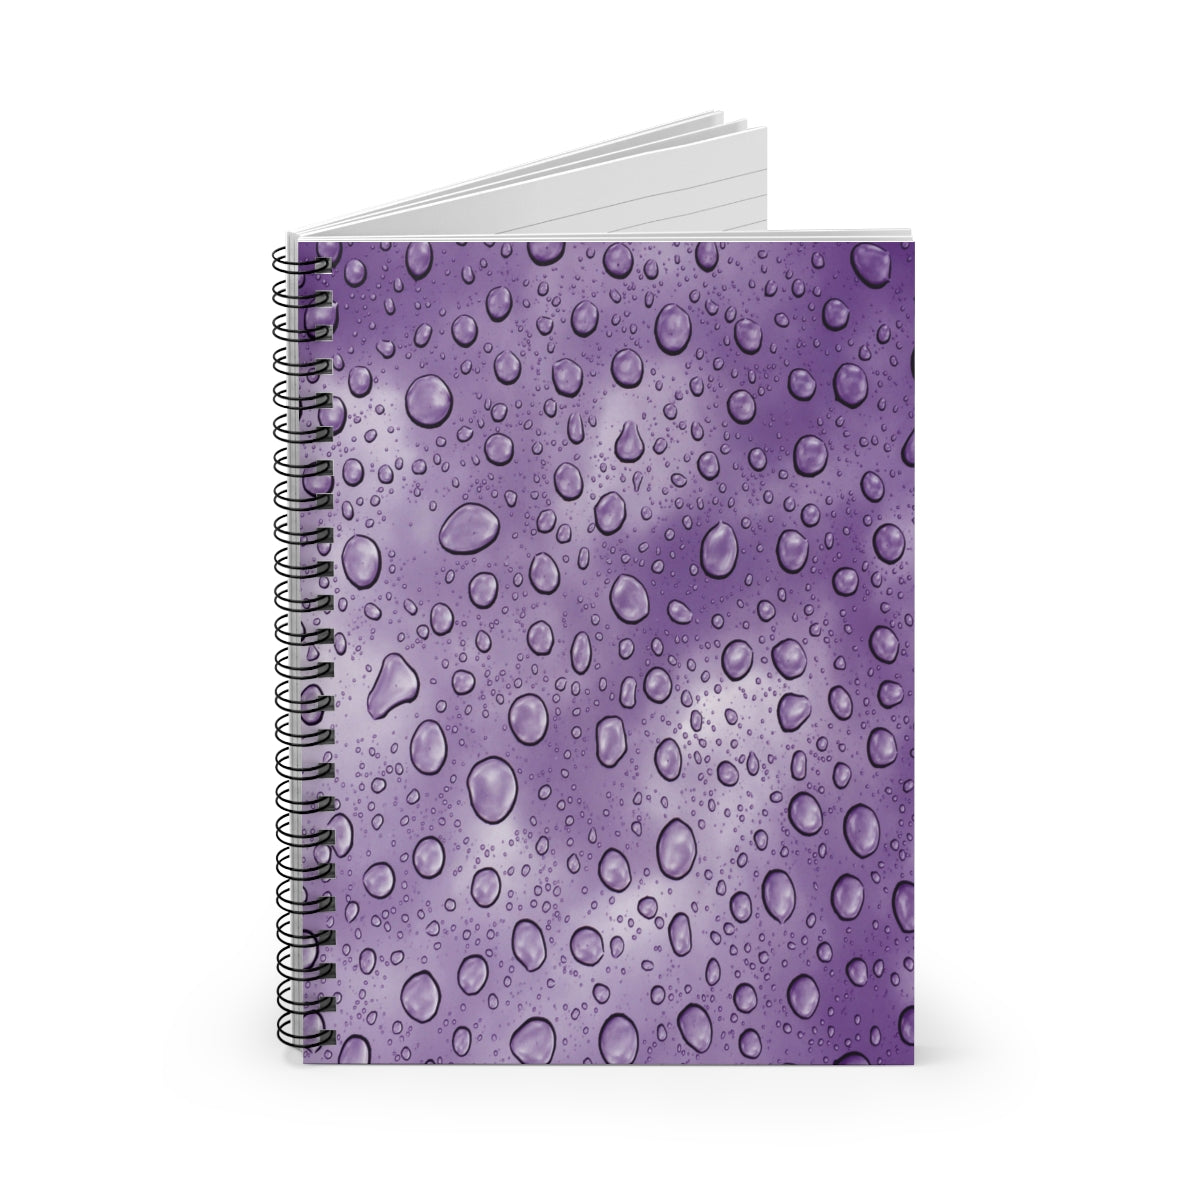 Lavender Water Droplets Spiral Ruled Line Notebook